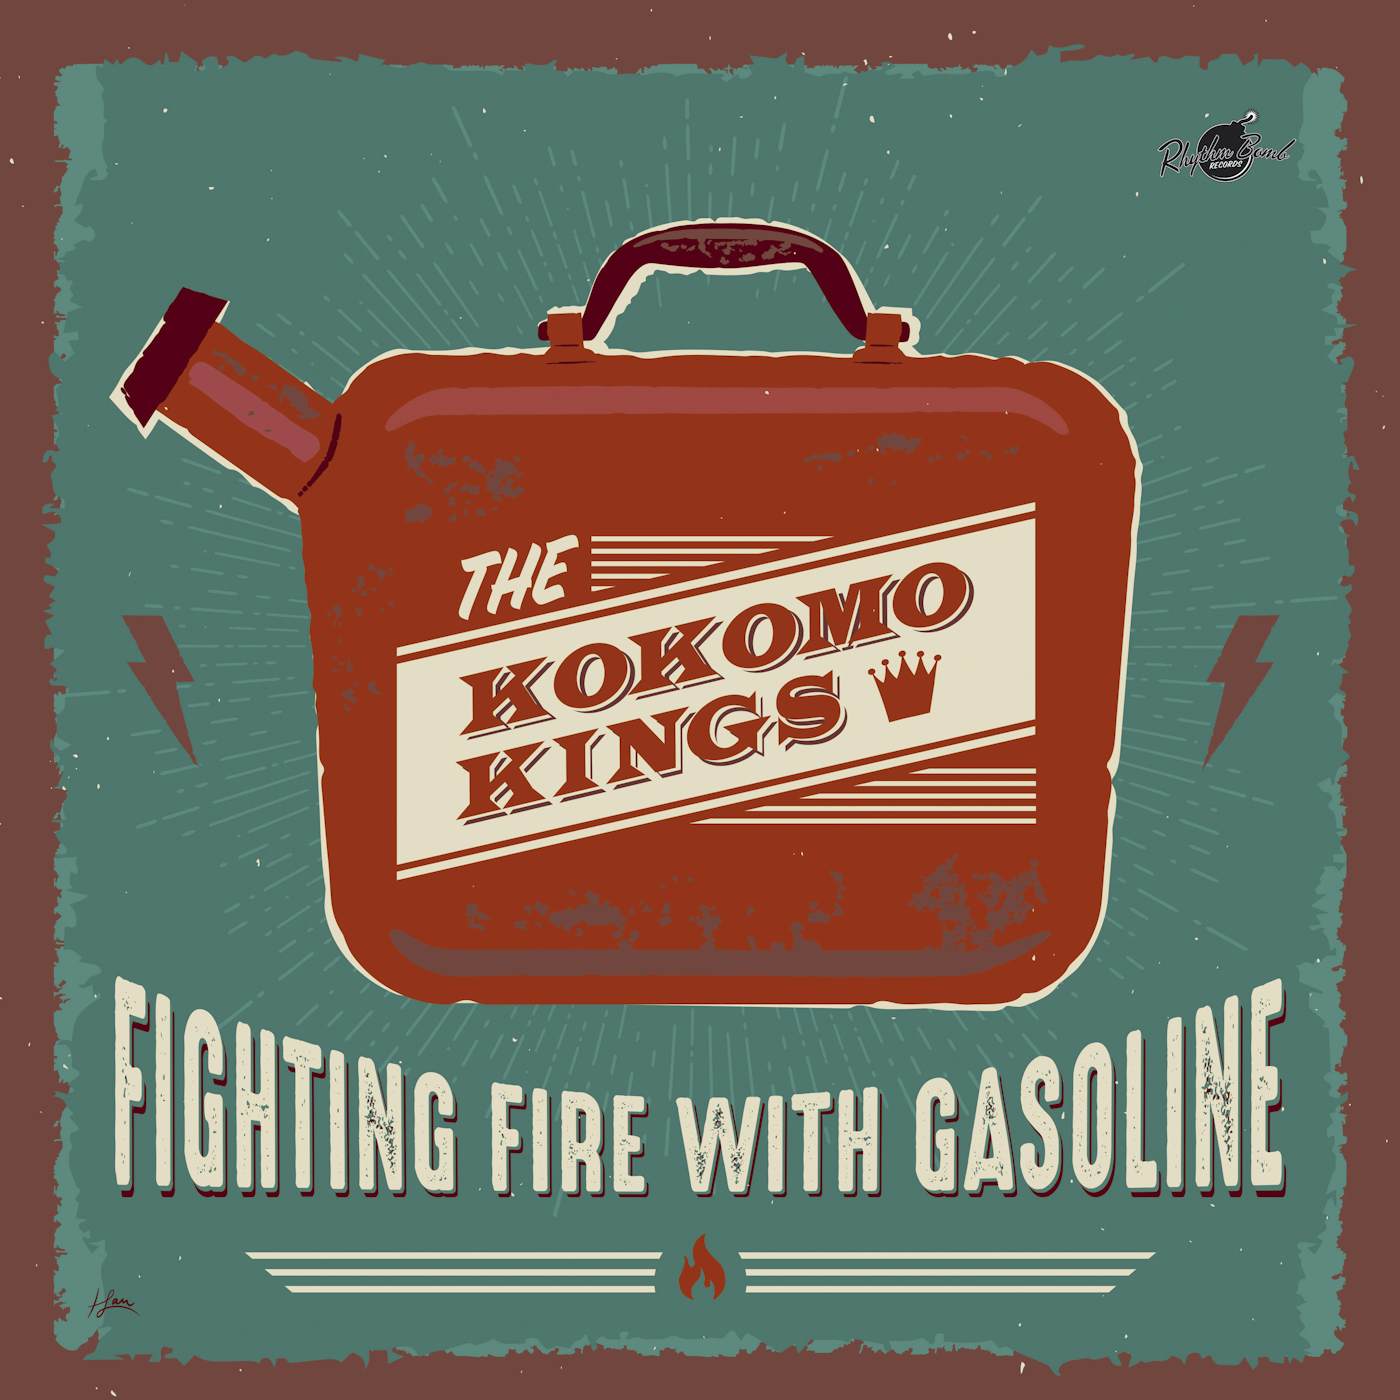 The Kokomo Kings Fighting fire with gasoline Vinyl Record